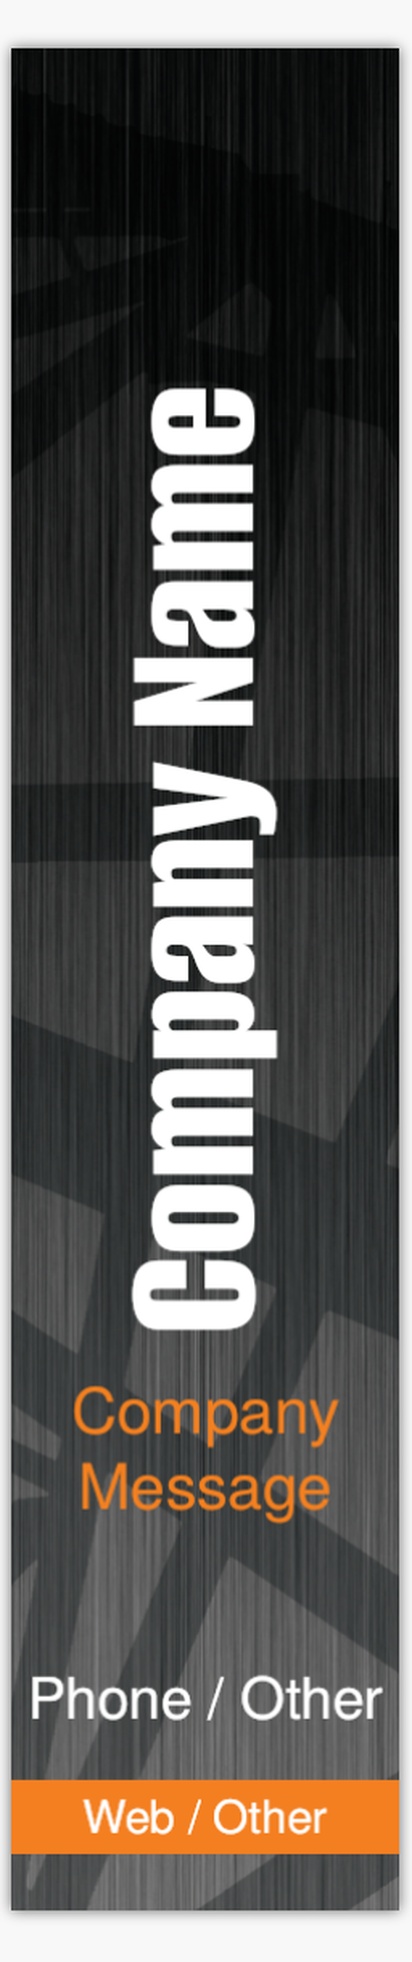 Design Preview for Design Gallery: Welding & Metal Work Vinyl Banners, 76 x 366 cm